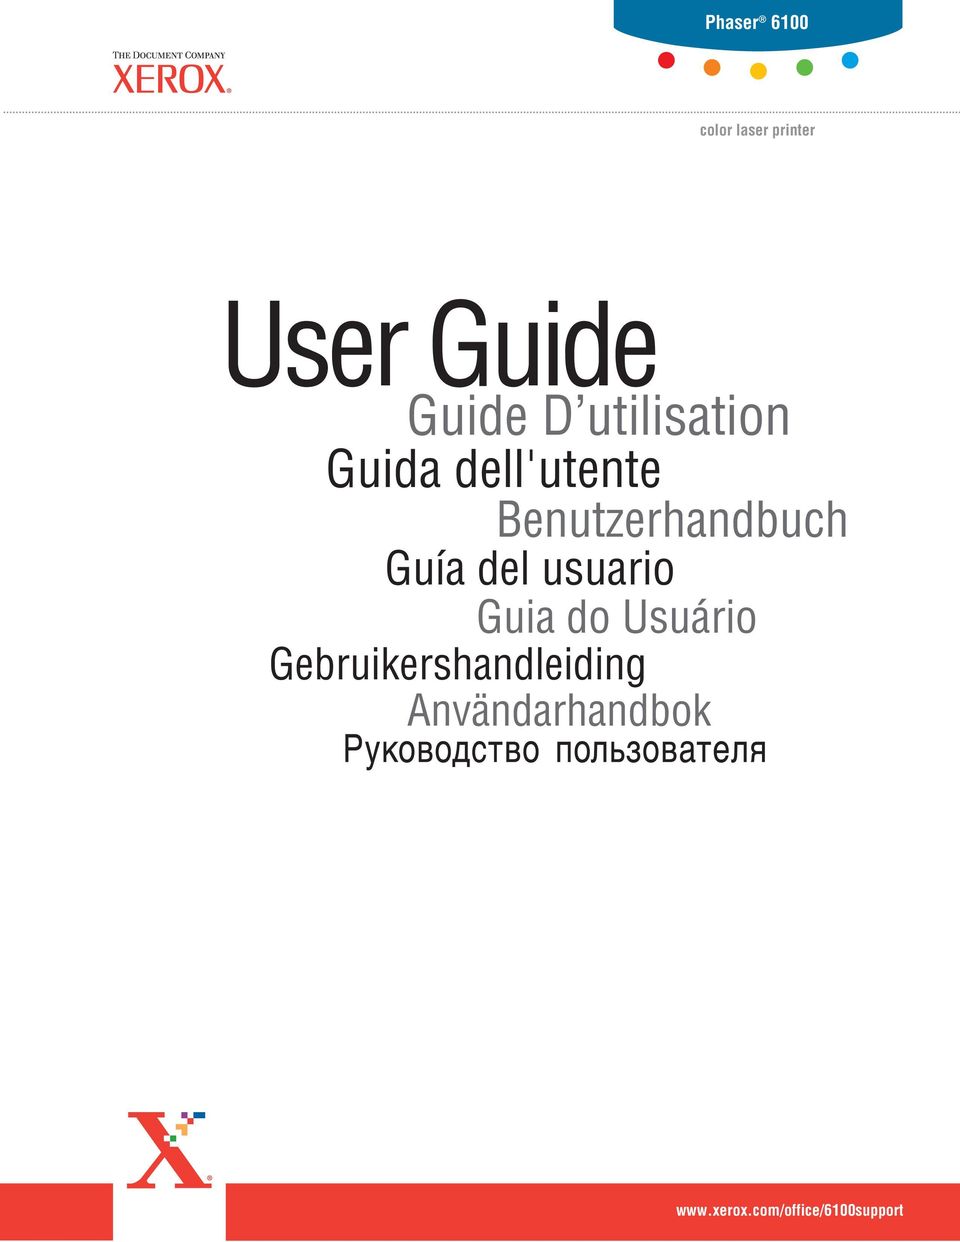 Guía del usuario Guia do Usuário